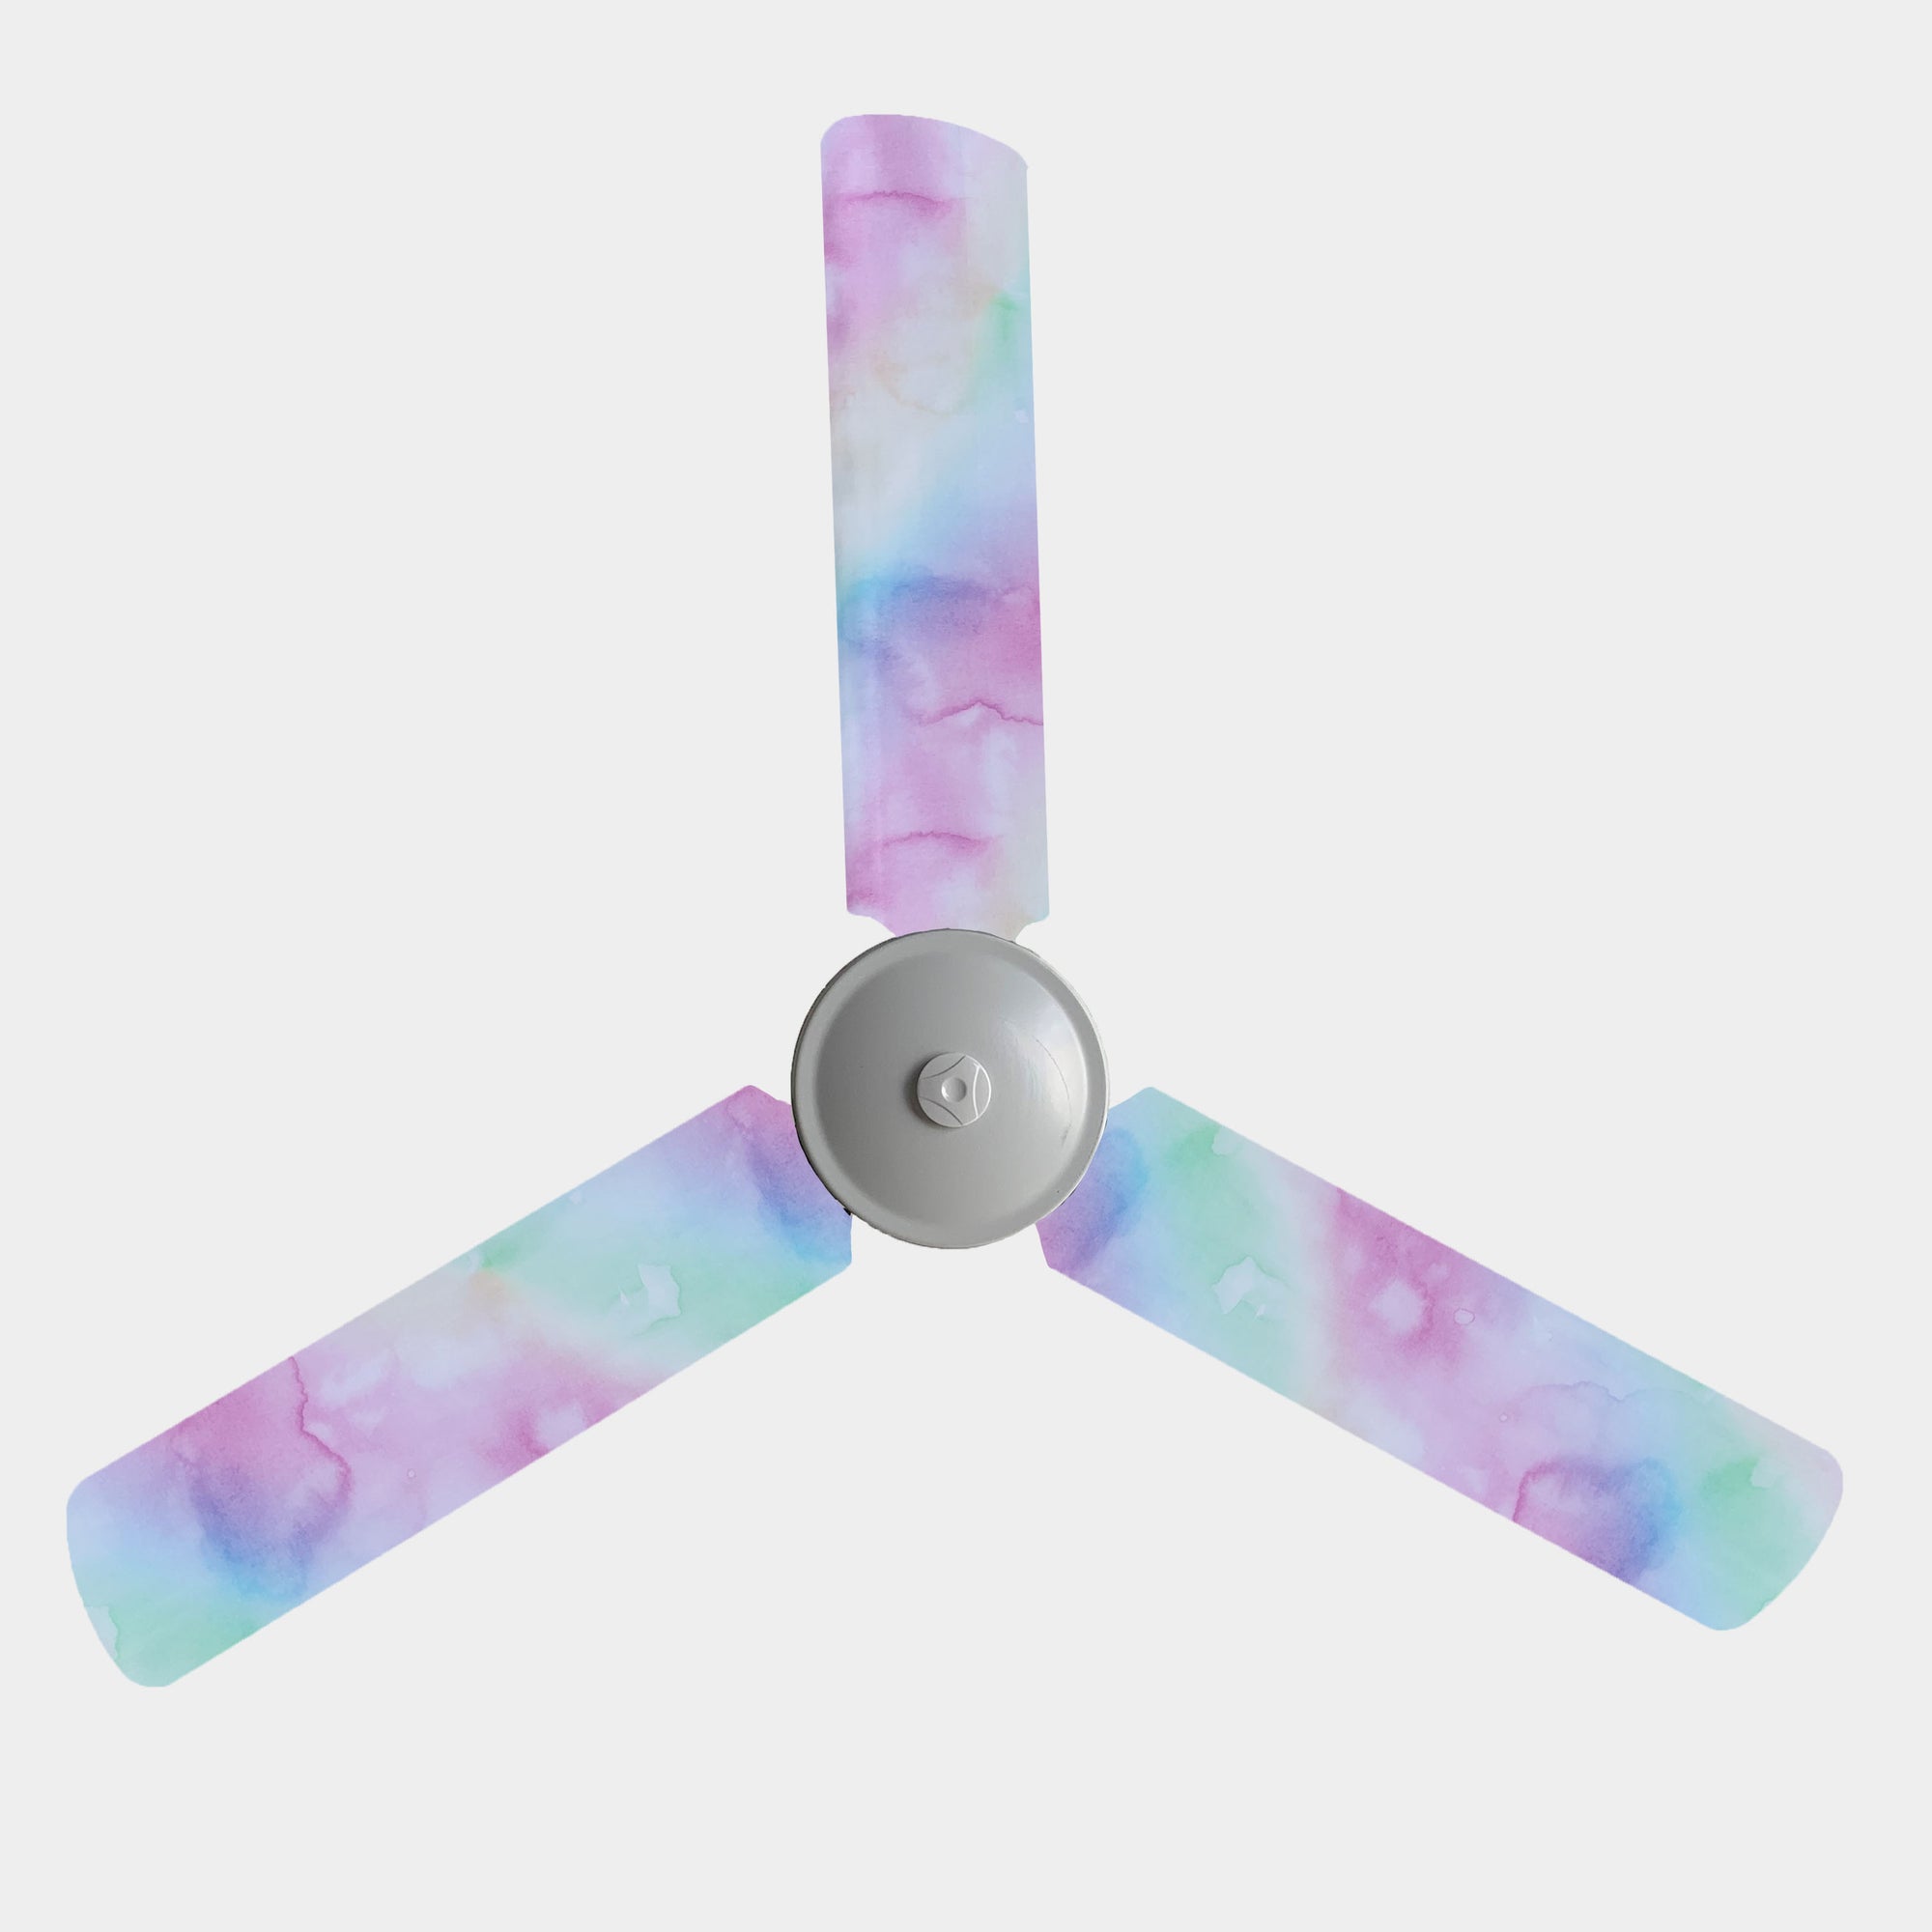 Pastel pink, purple, yellow, and green cloud-like pattern fan covers on three blade ceiling fan.